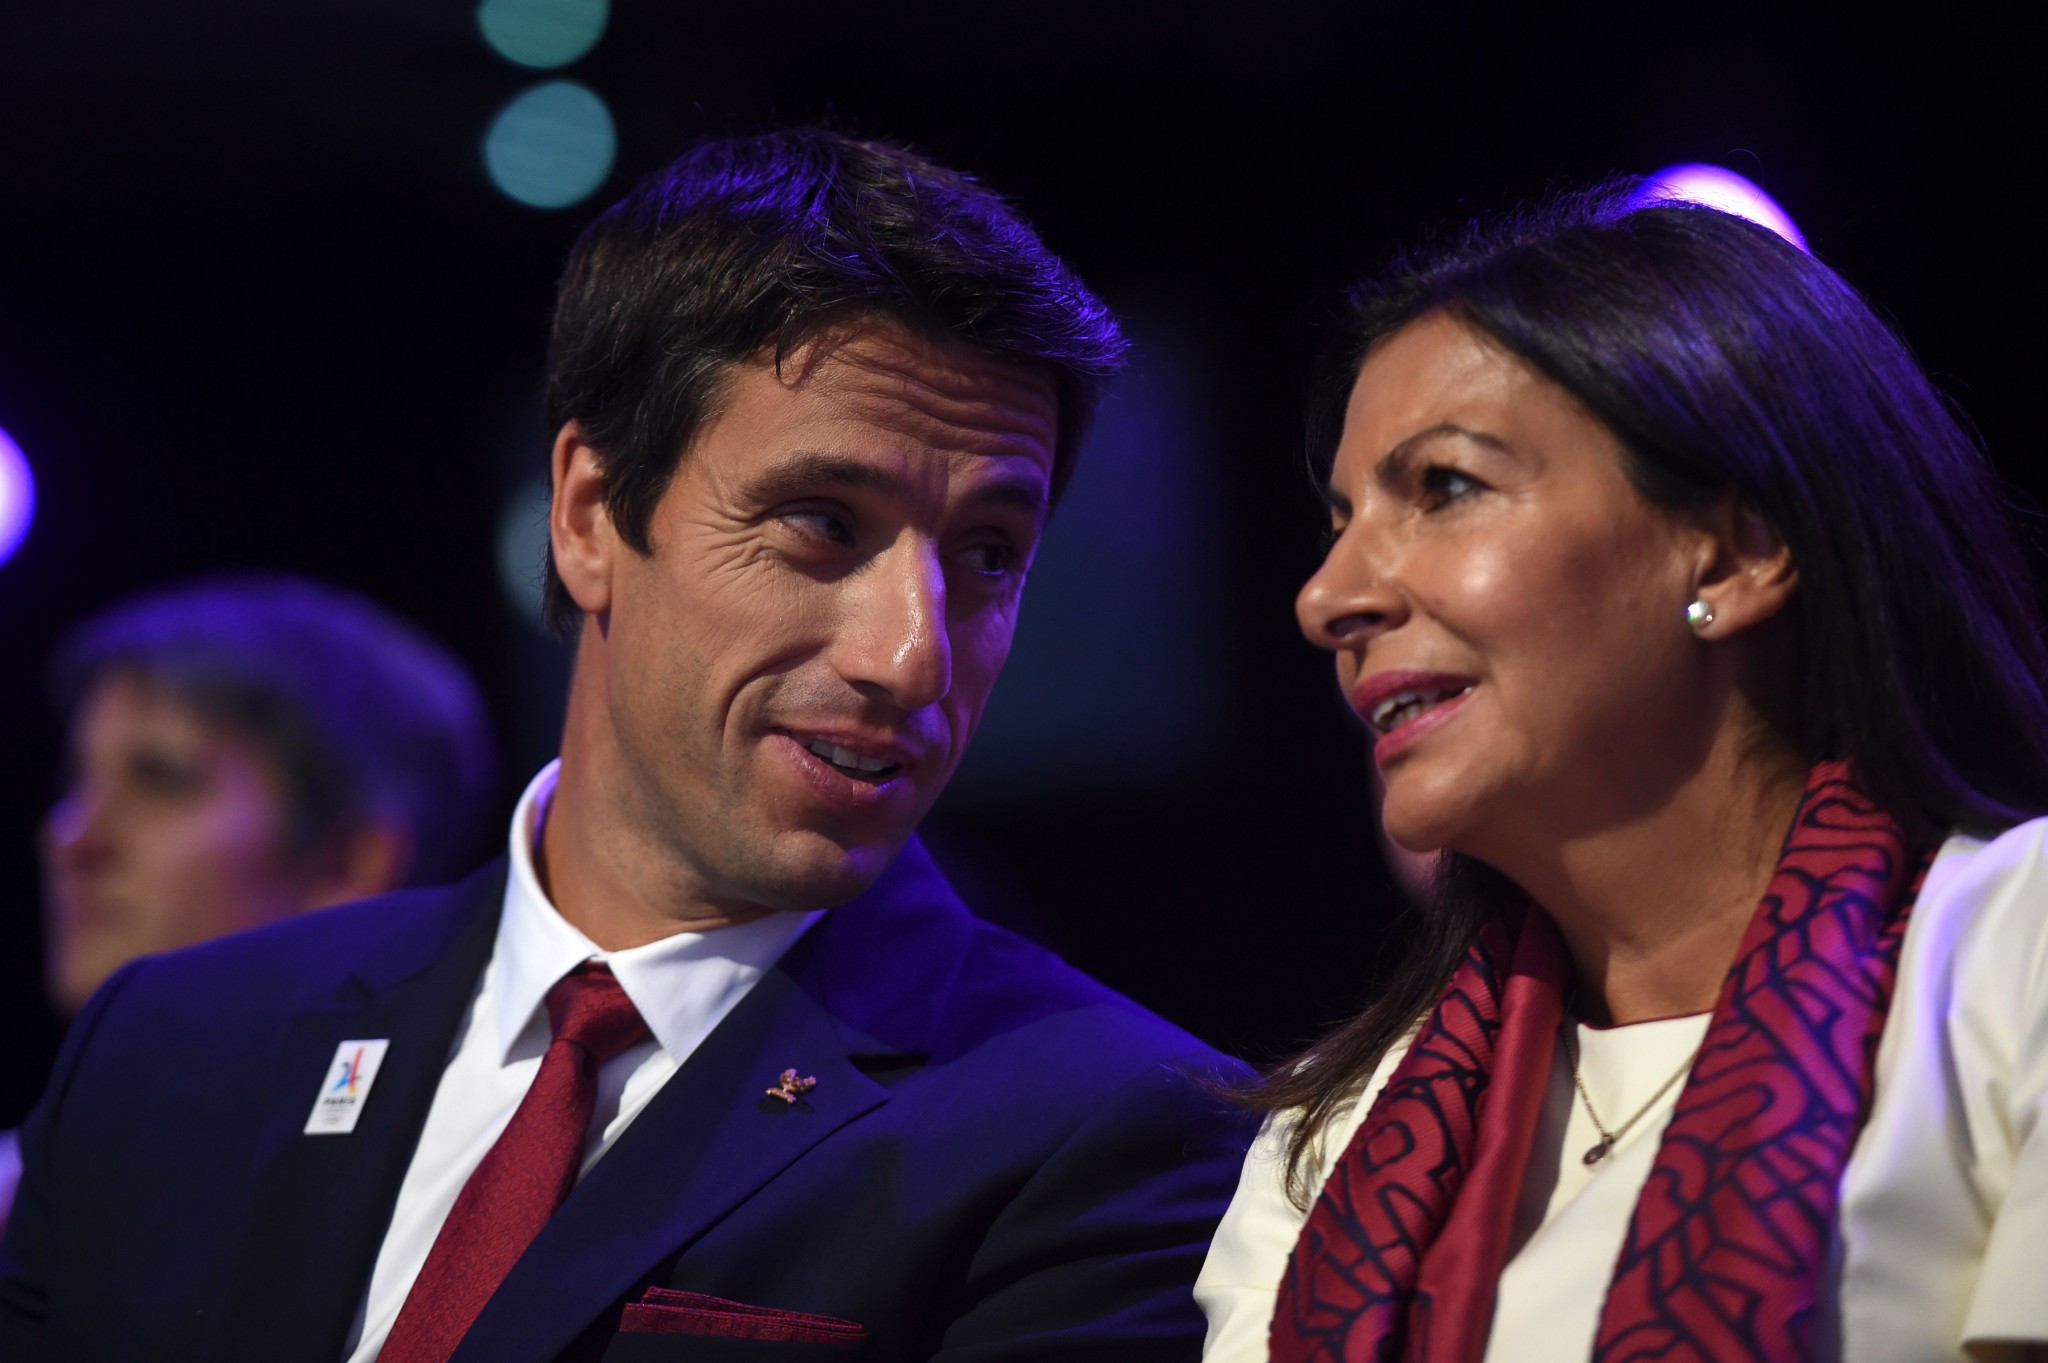 Tony Estanguet, left, and Anne Hidalgo were among leading Paris 2024 speakers ©Getty Images